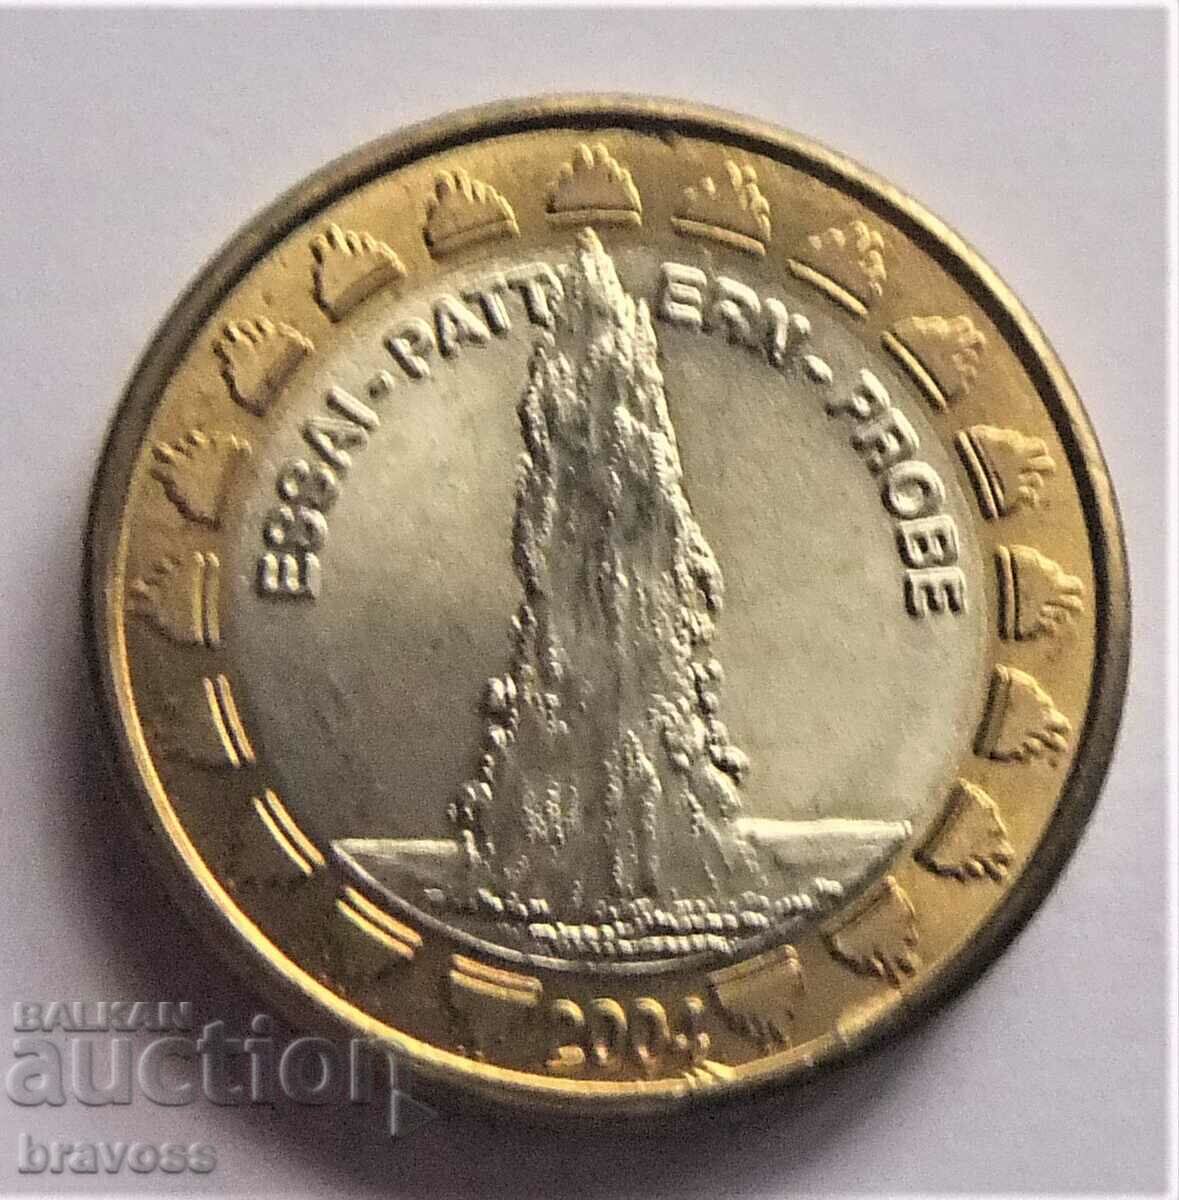 Vatican - 1 euro 2004 - sample